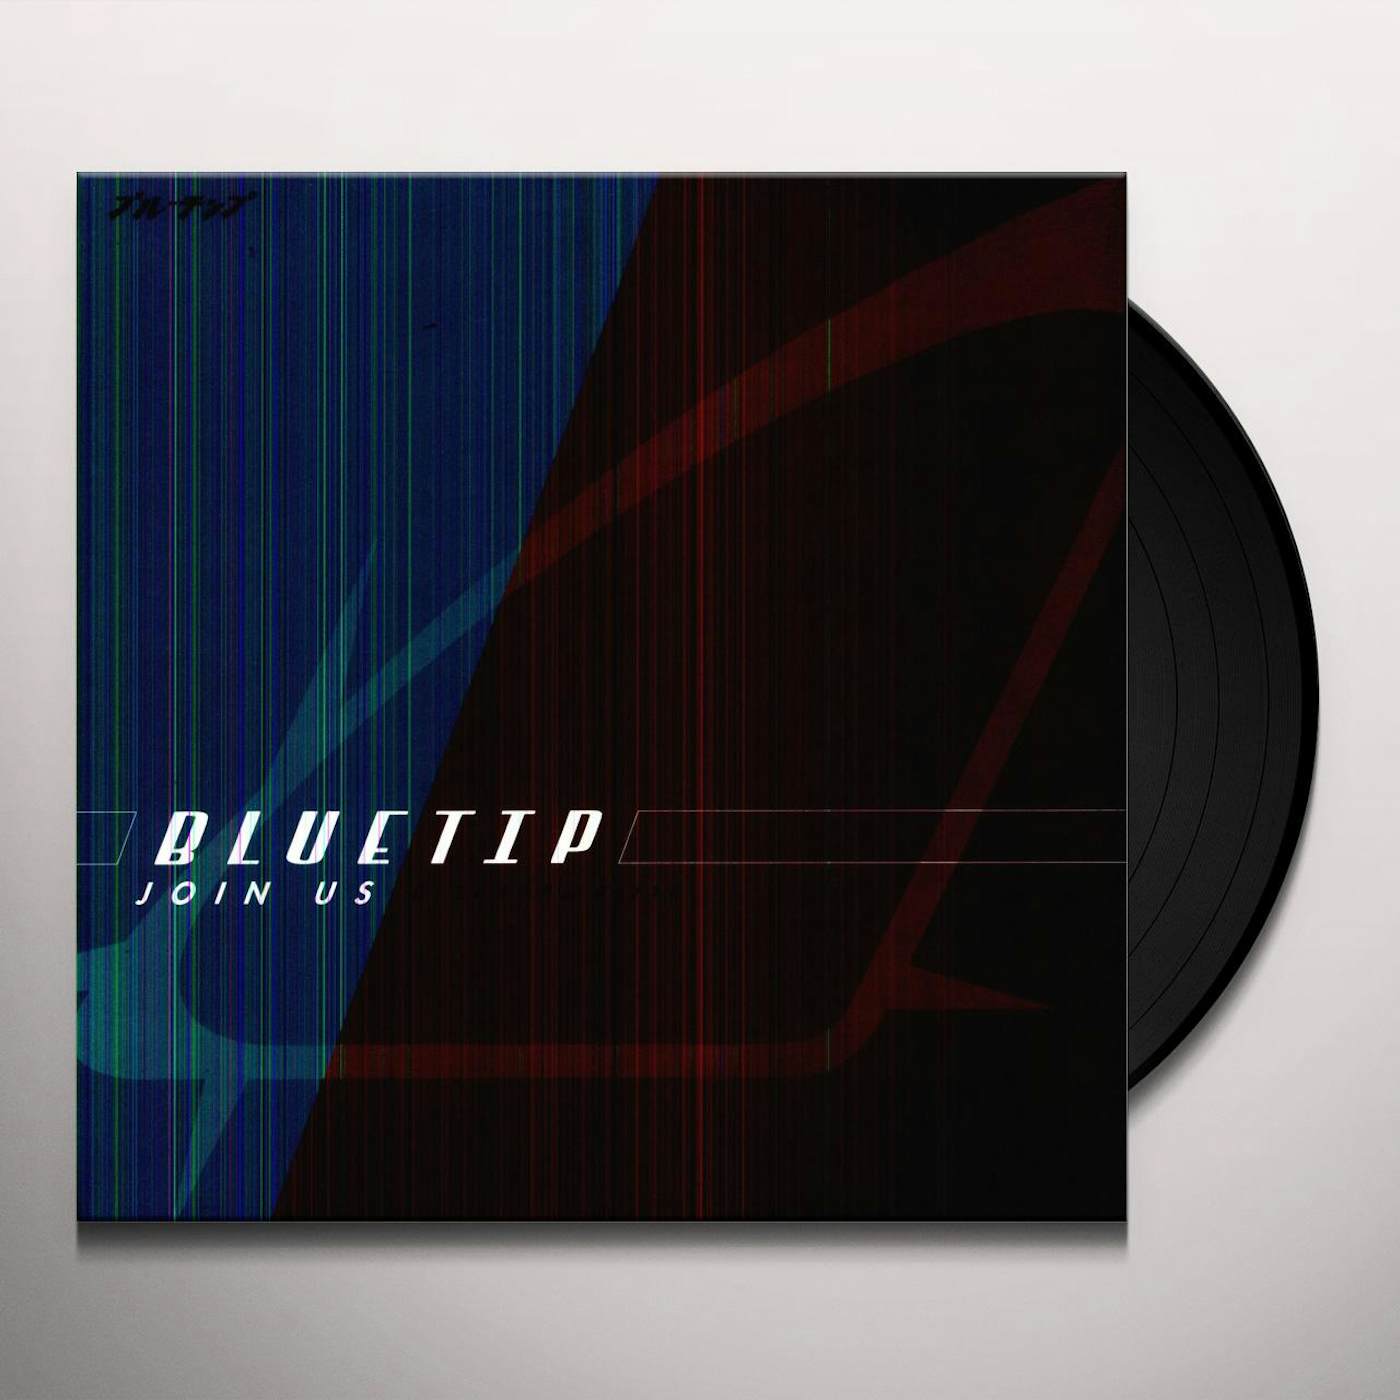 Bluetip Join Us Vinyl Record